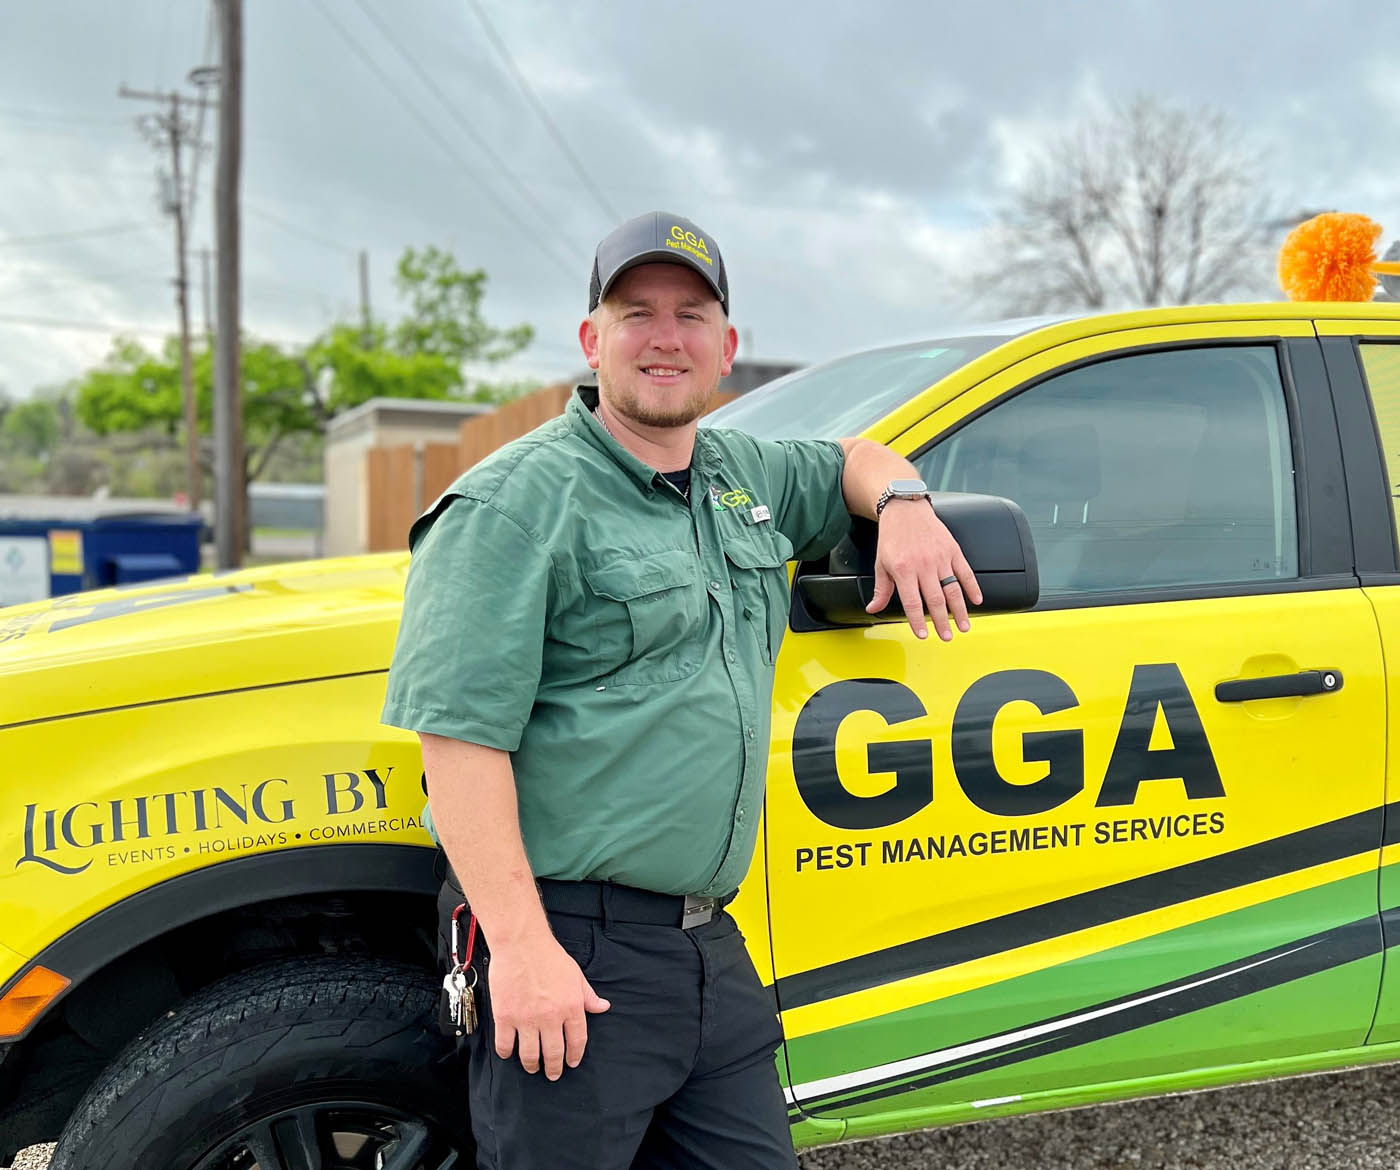 GGA Pest Management Waco, TX technician.